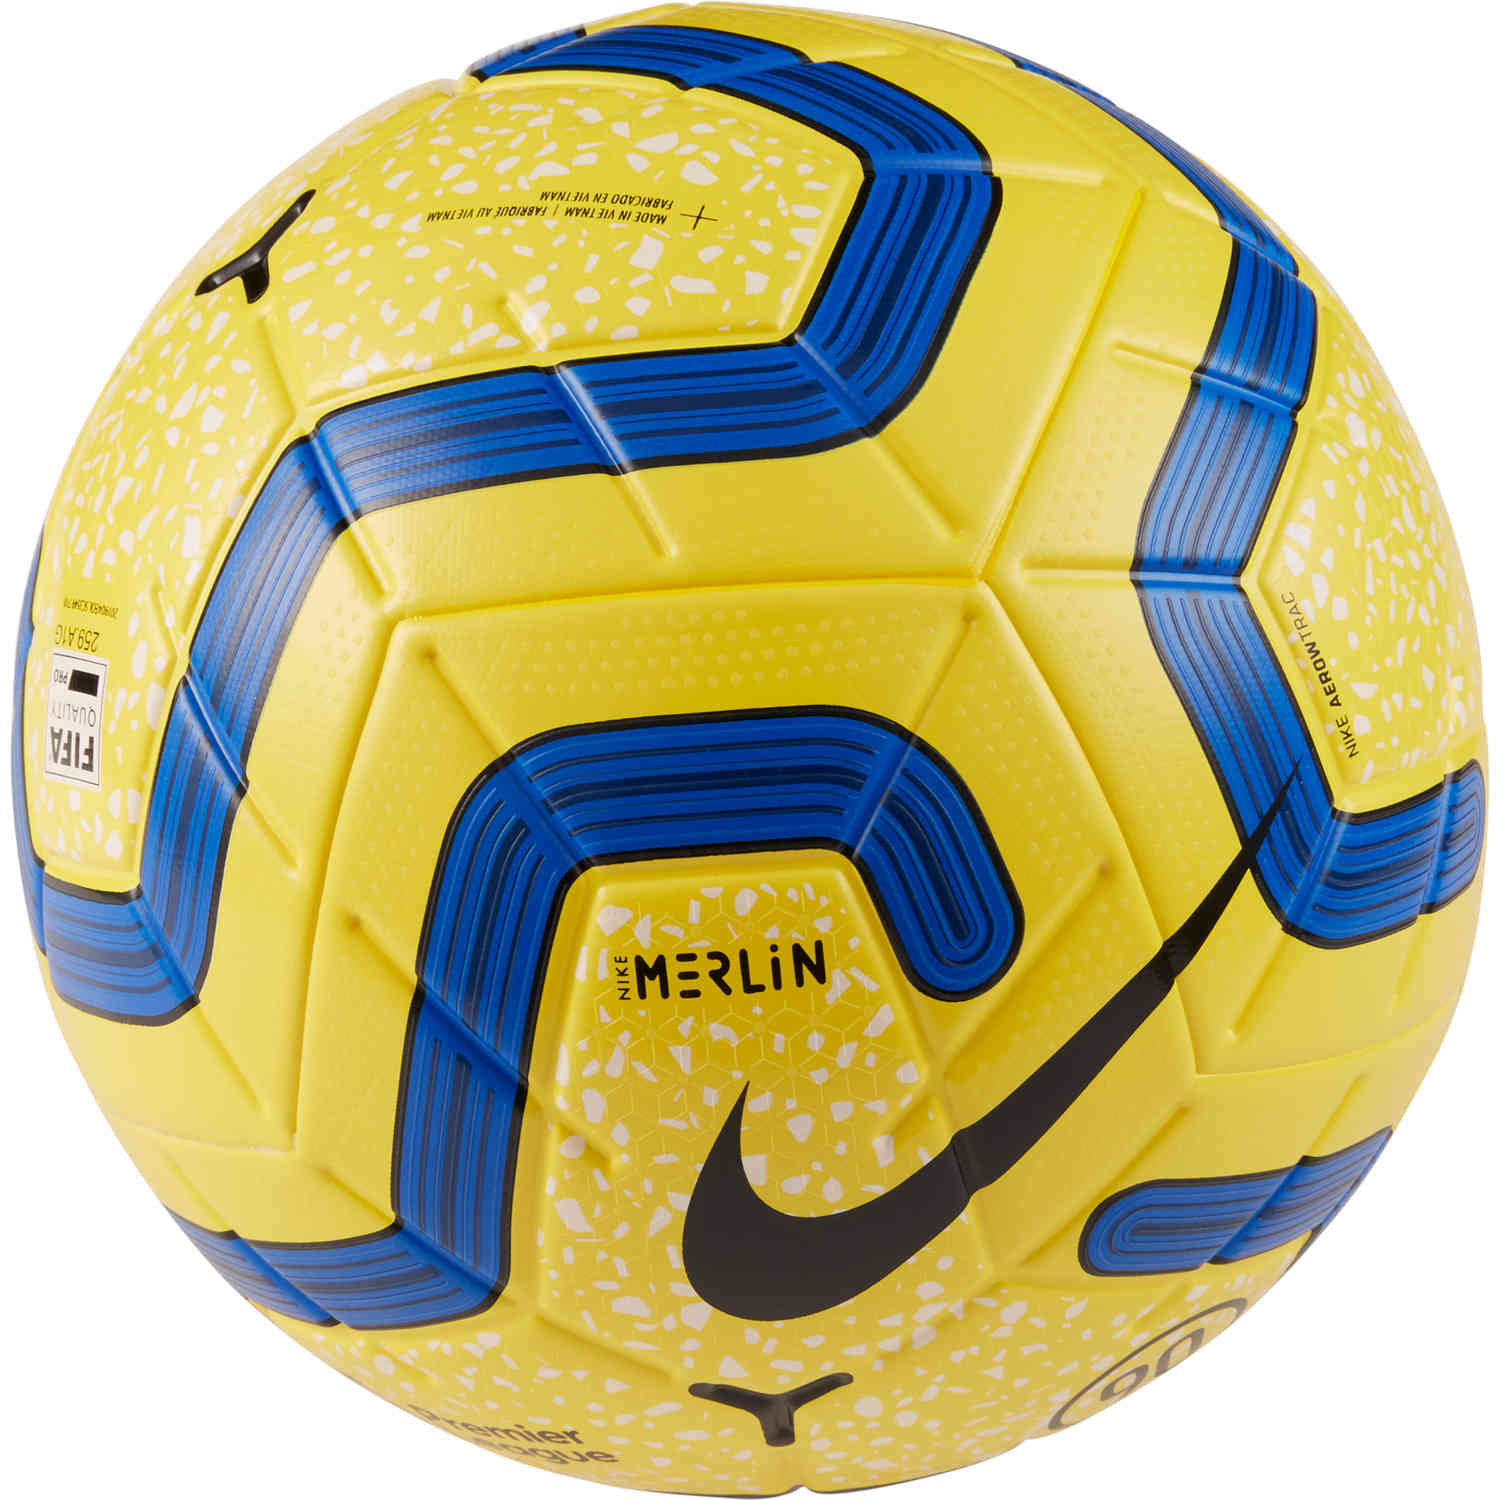 Nike Hi-vis Premier League Merlin Official Match Soccer Ball -  Yellow/Blue/Black - SoccerPro